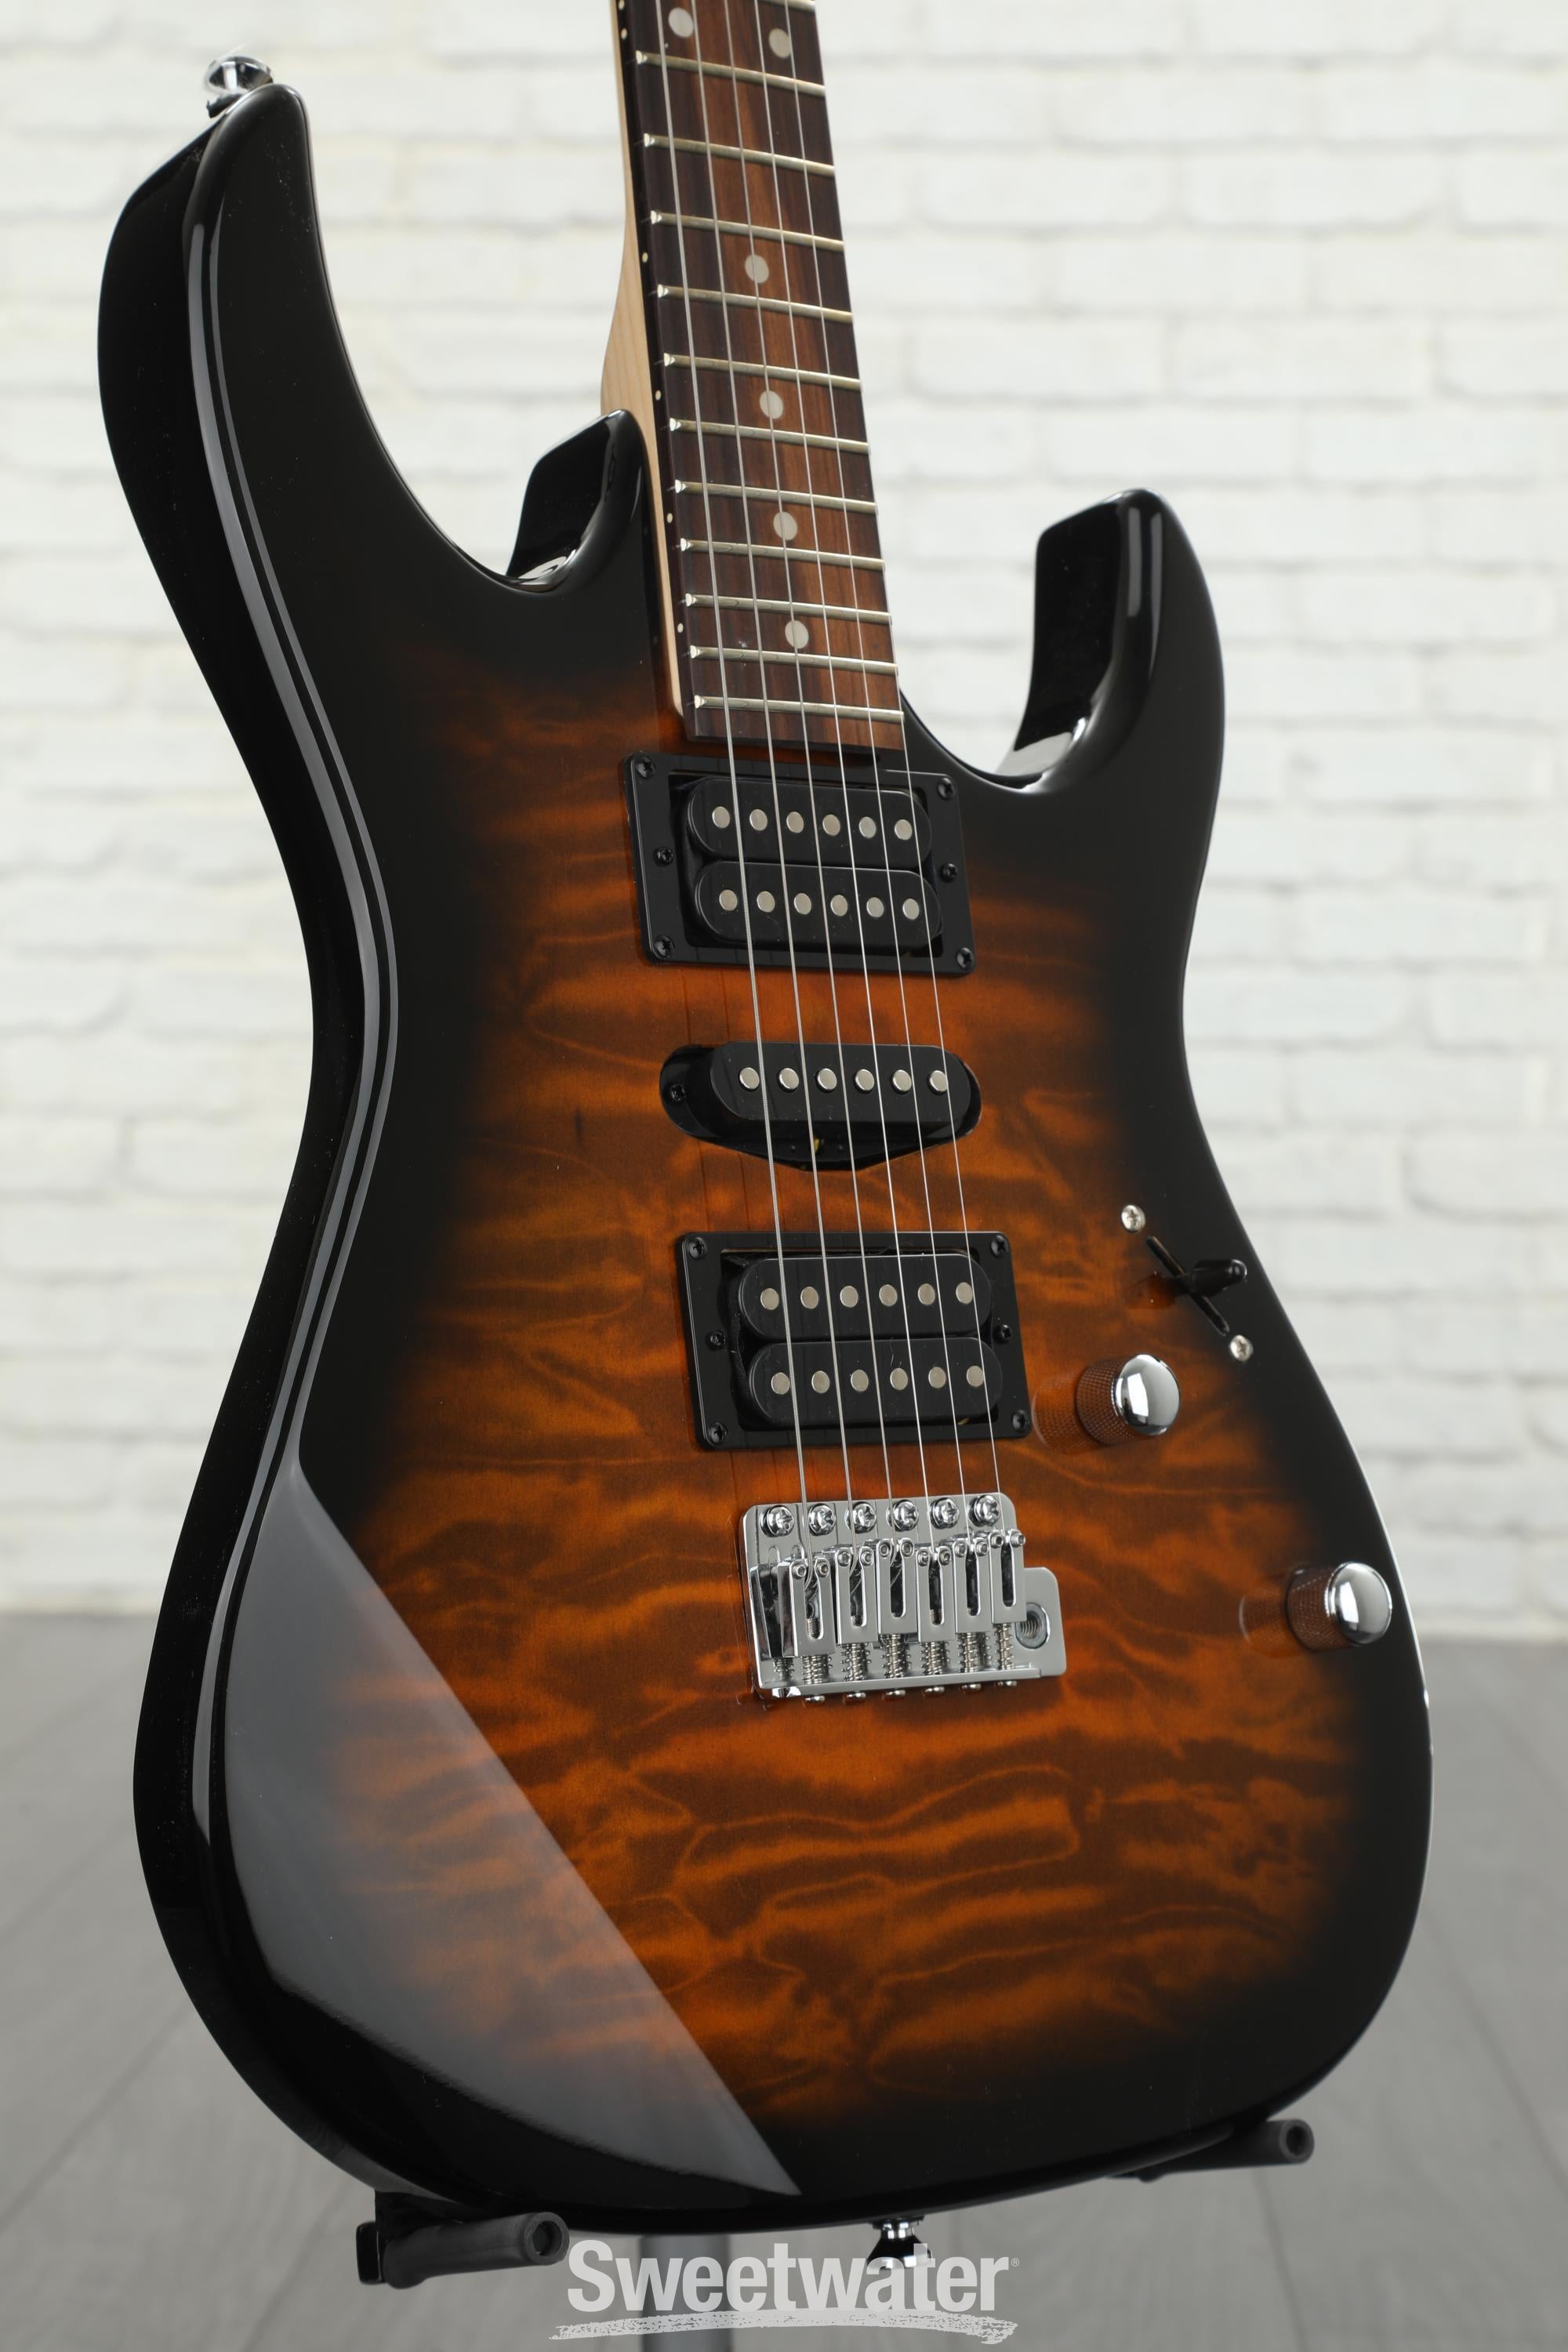 Ibanez Gio GRX70QA Electric Guitar - Sunburst